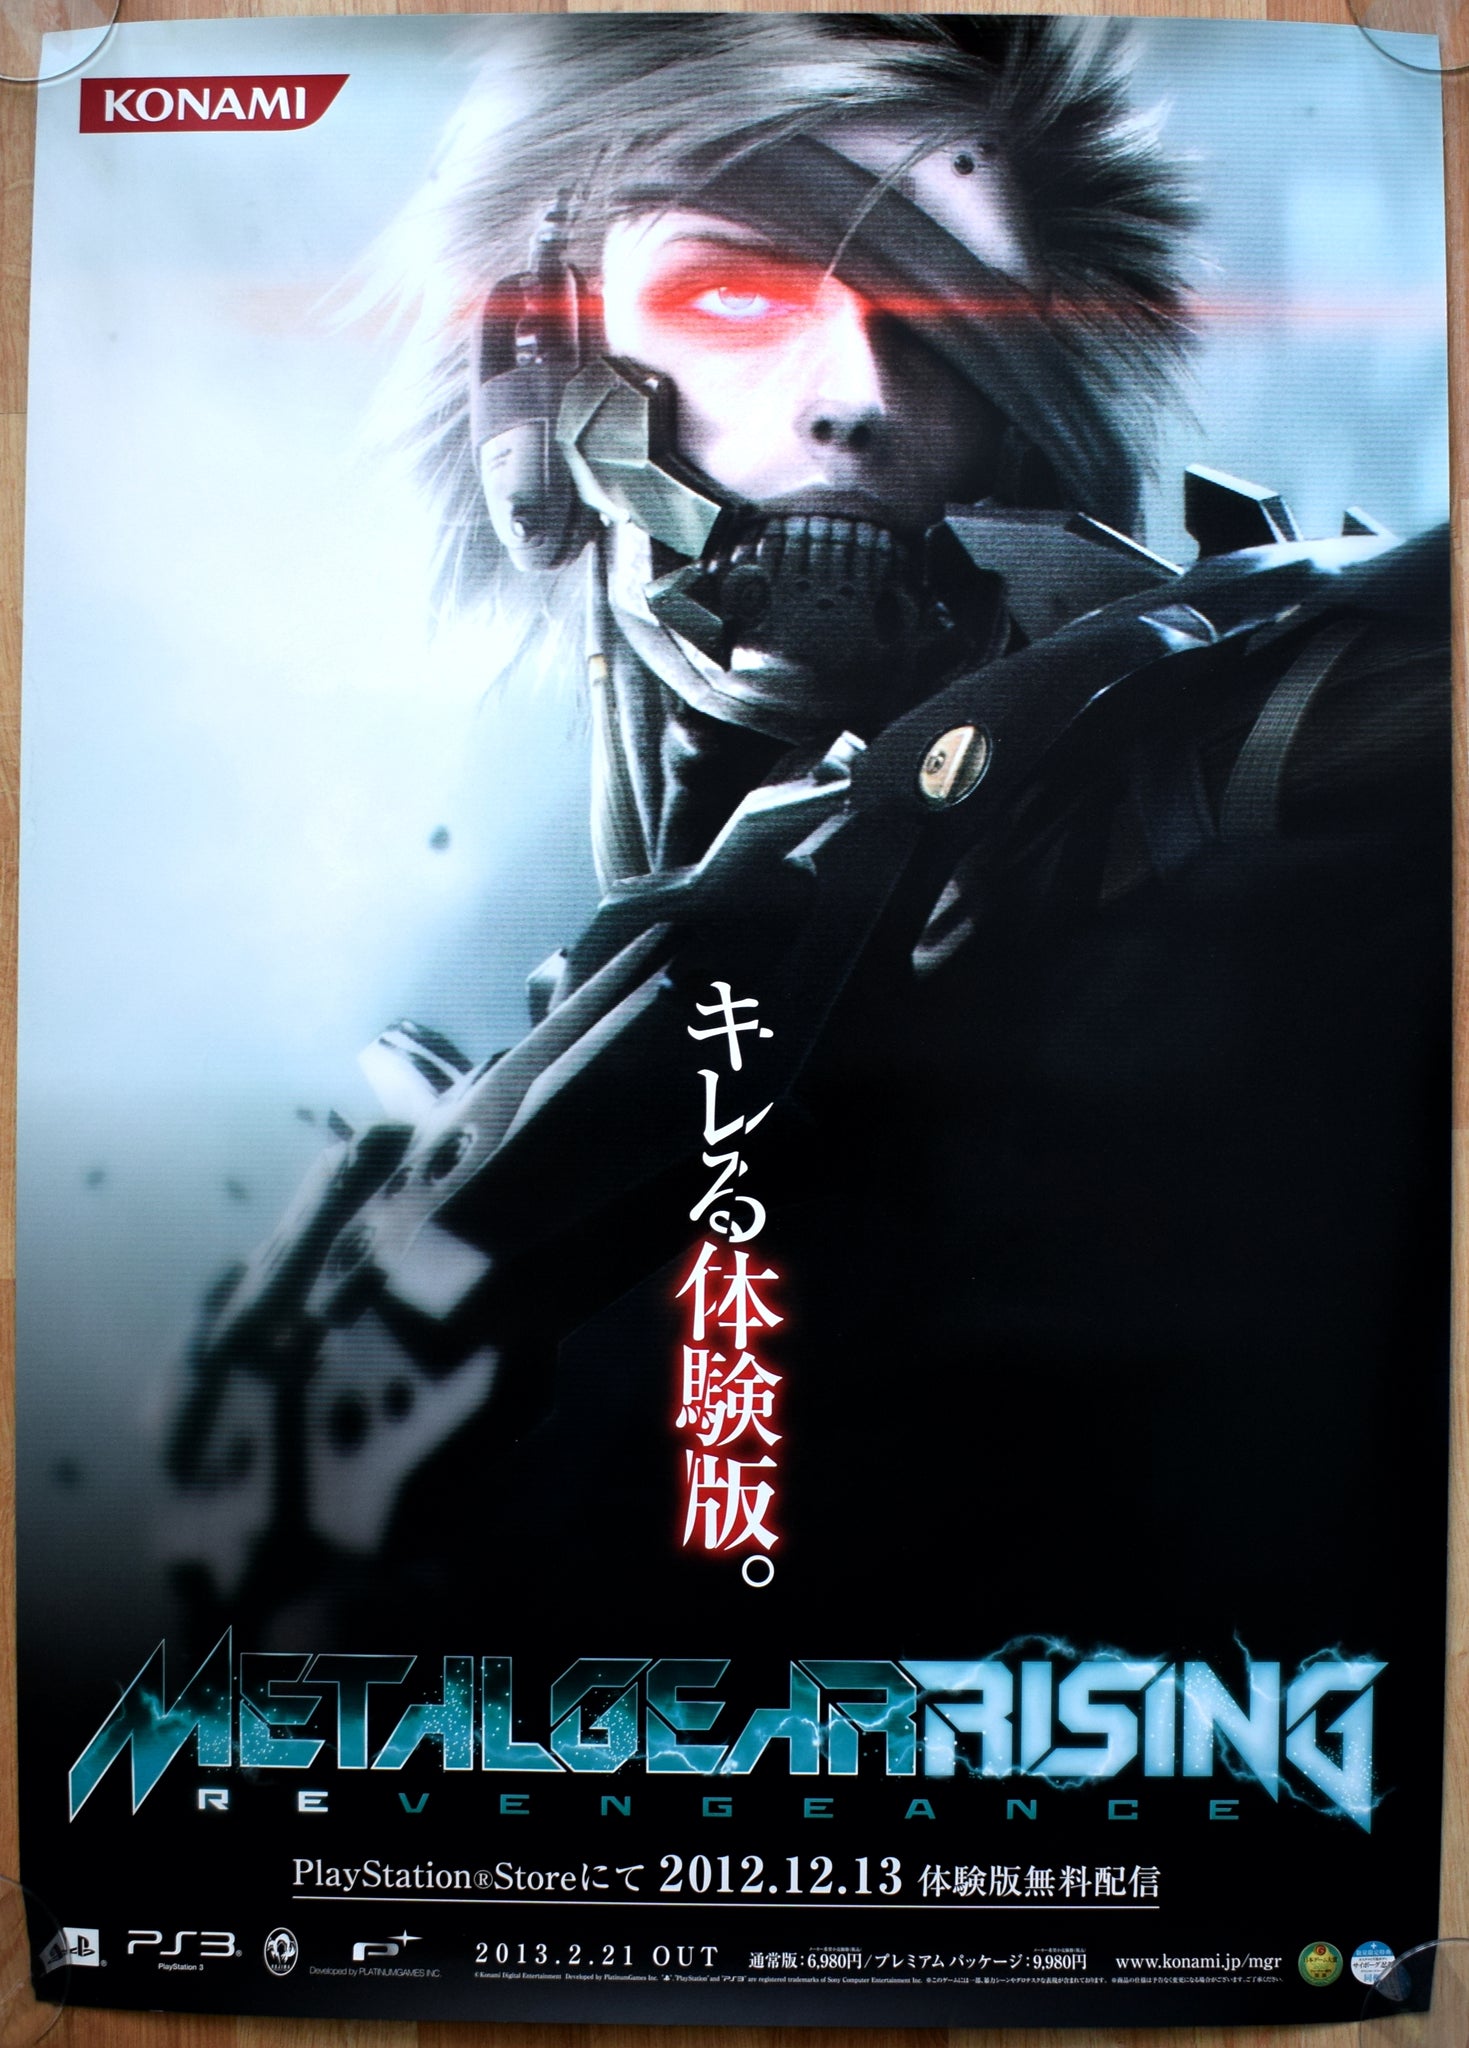 Metal Gear Rising (B2) Japanese Promotional Poster #2